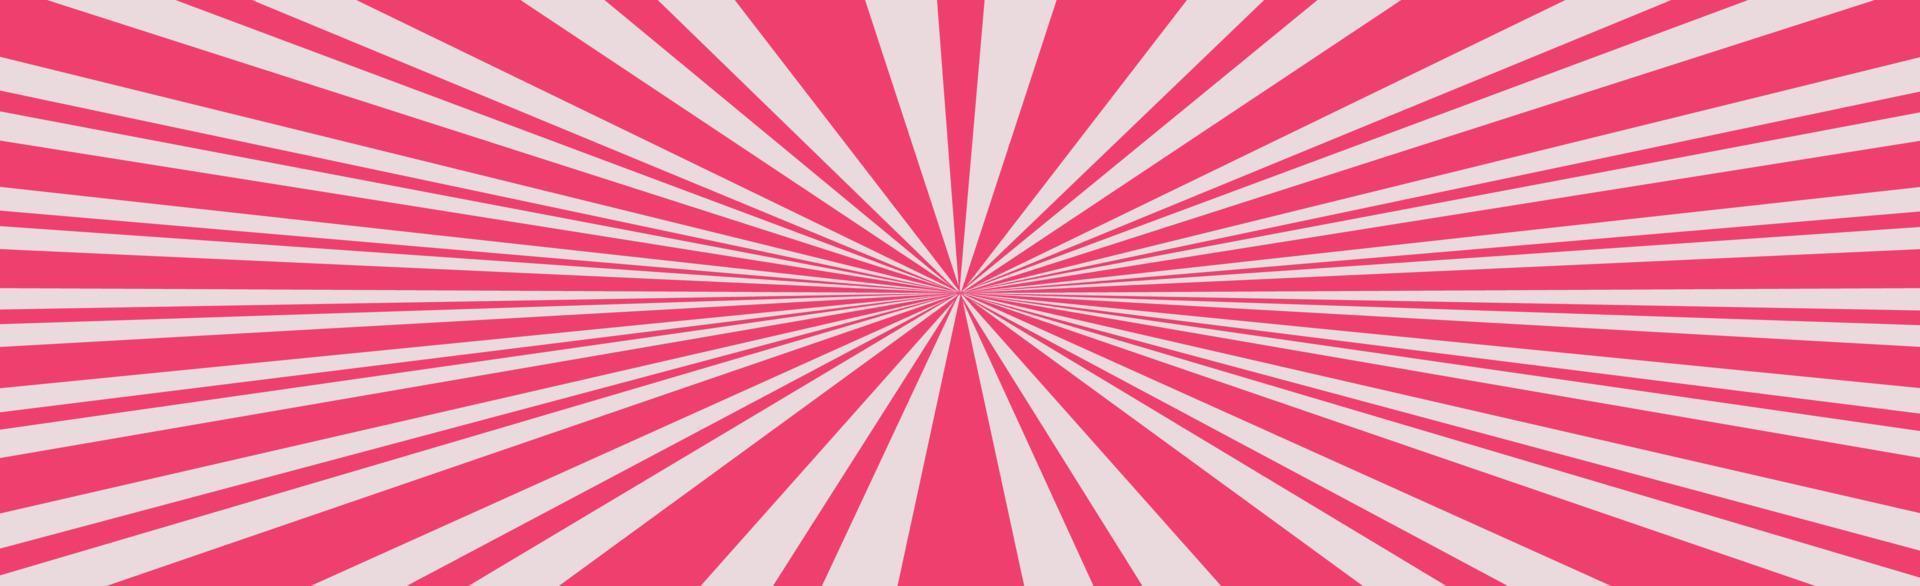 karamel delicaat licht wit - roze achtergrond - vector